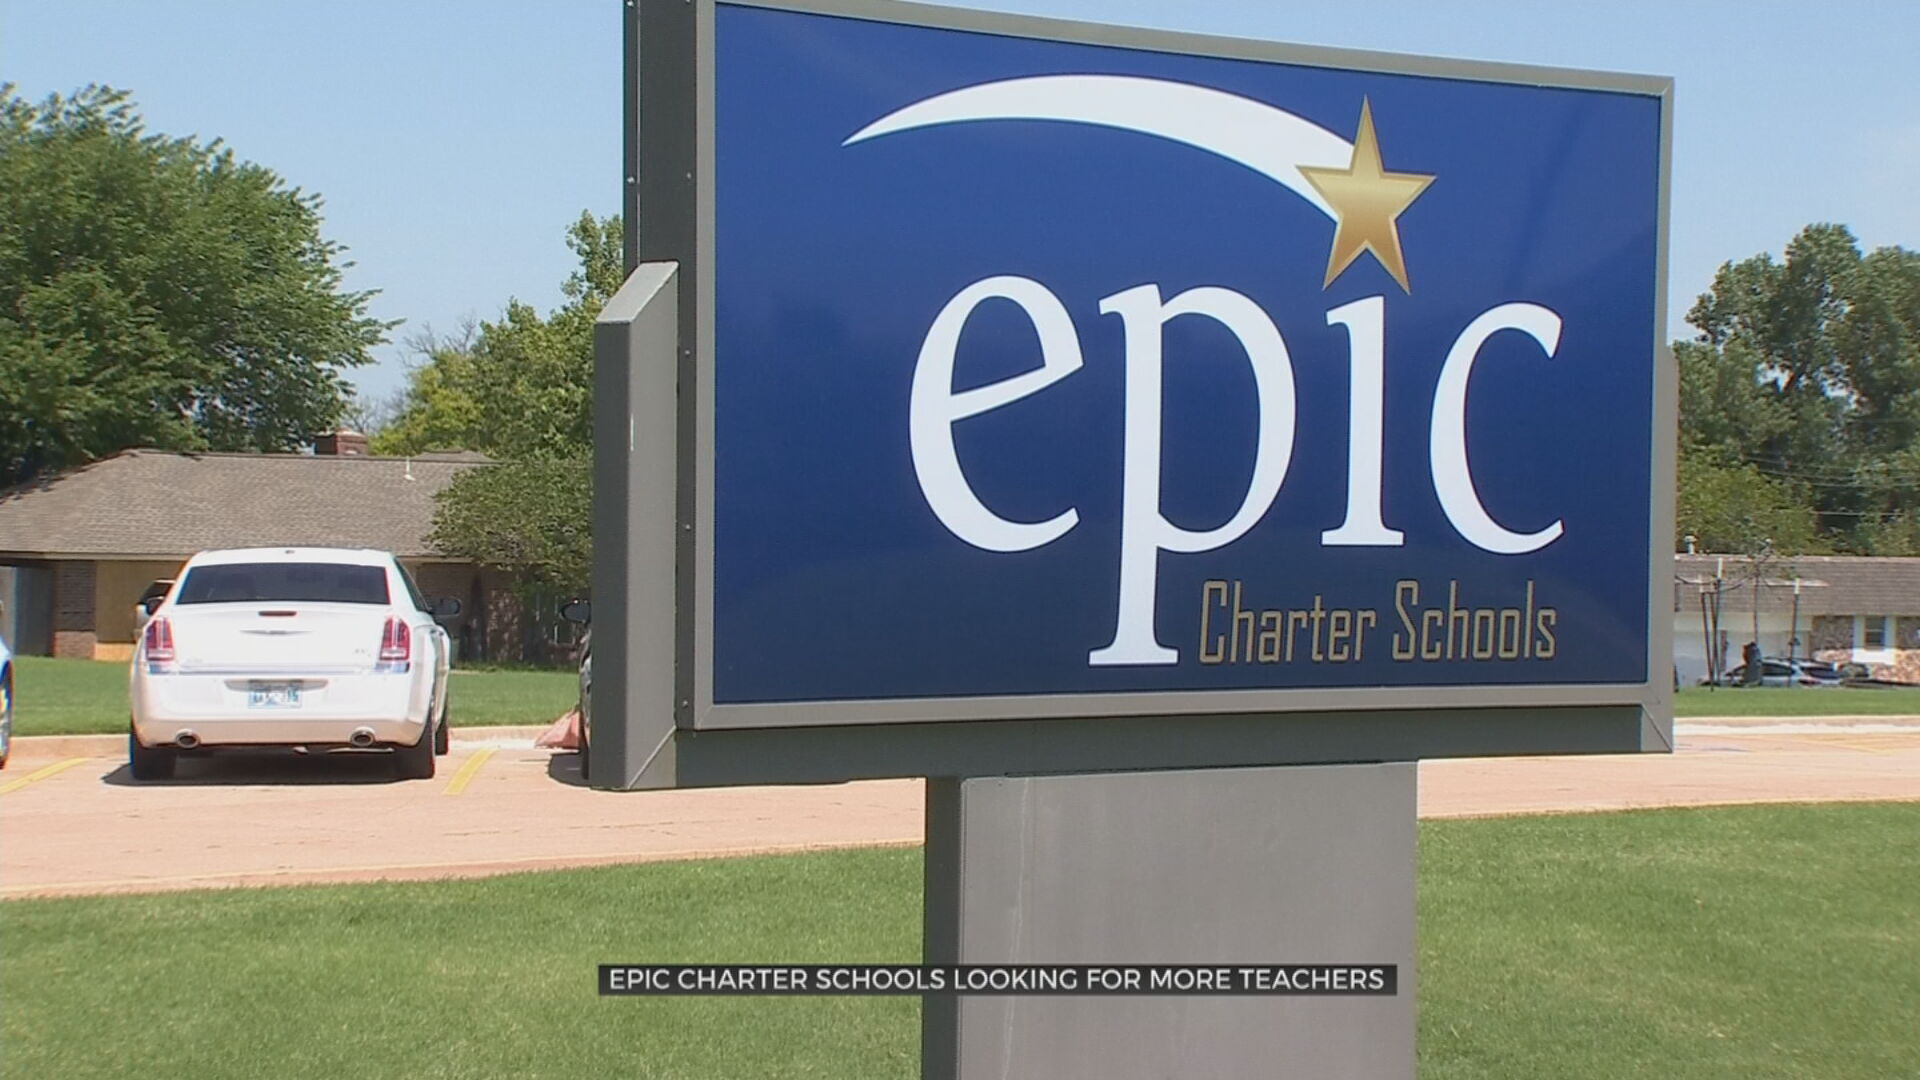 Epic Charter Schools Seeking More Teachers As Enrollment Rises